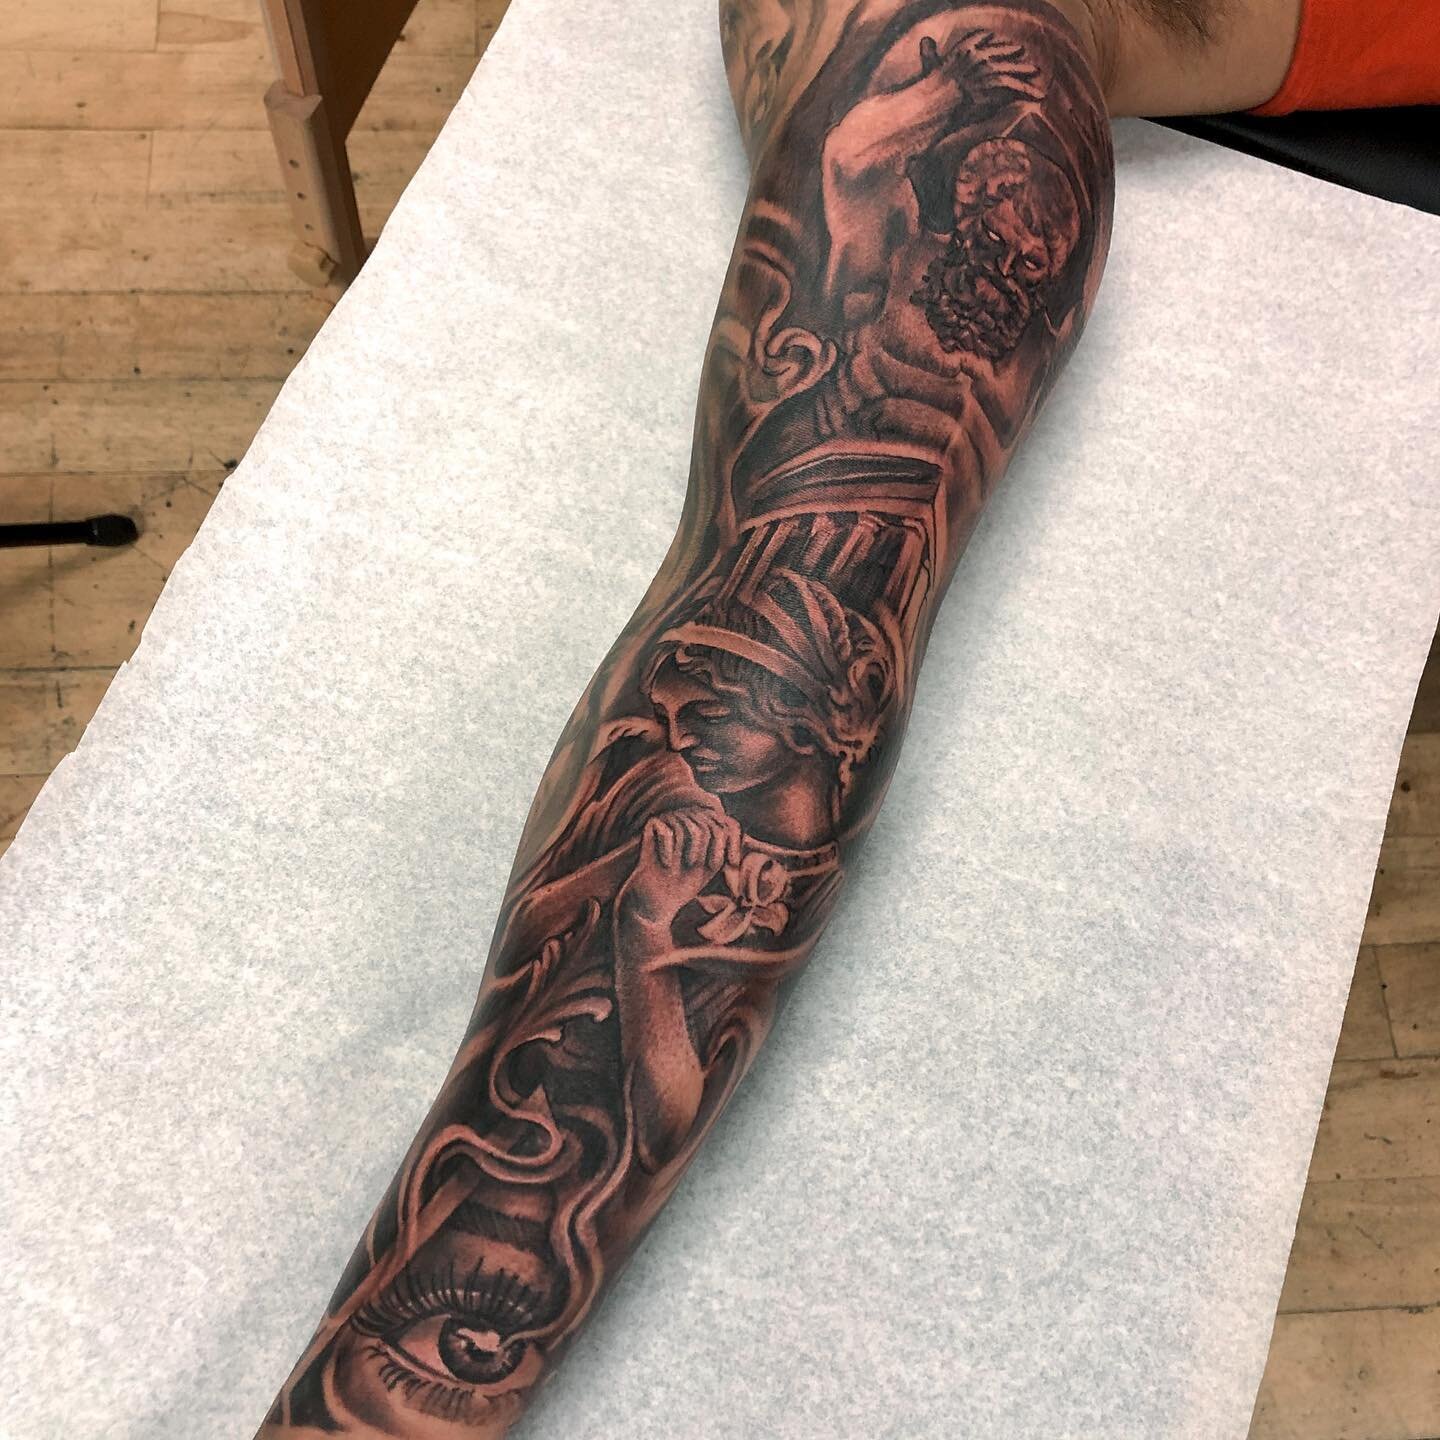 🇨🇦🇨🇦🇨🇦🇨🇦🇨🇦
Done using @eldiabloneedles 
.
.

#fullsleevetattoo #tattoo #tattoos #ink #inked #tattooart #tattooideas #traditional #tattoodesign #tattooed #tattoolife #kylefreshink #tattooink #blackandgreytattoo #blackworktattoo #tattooing #b